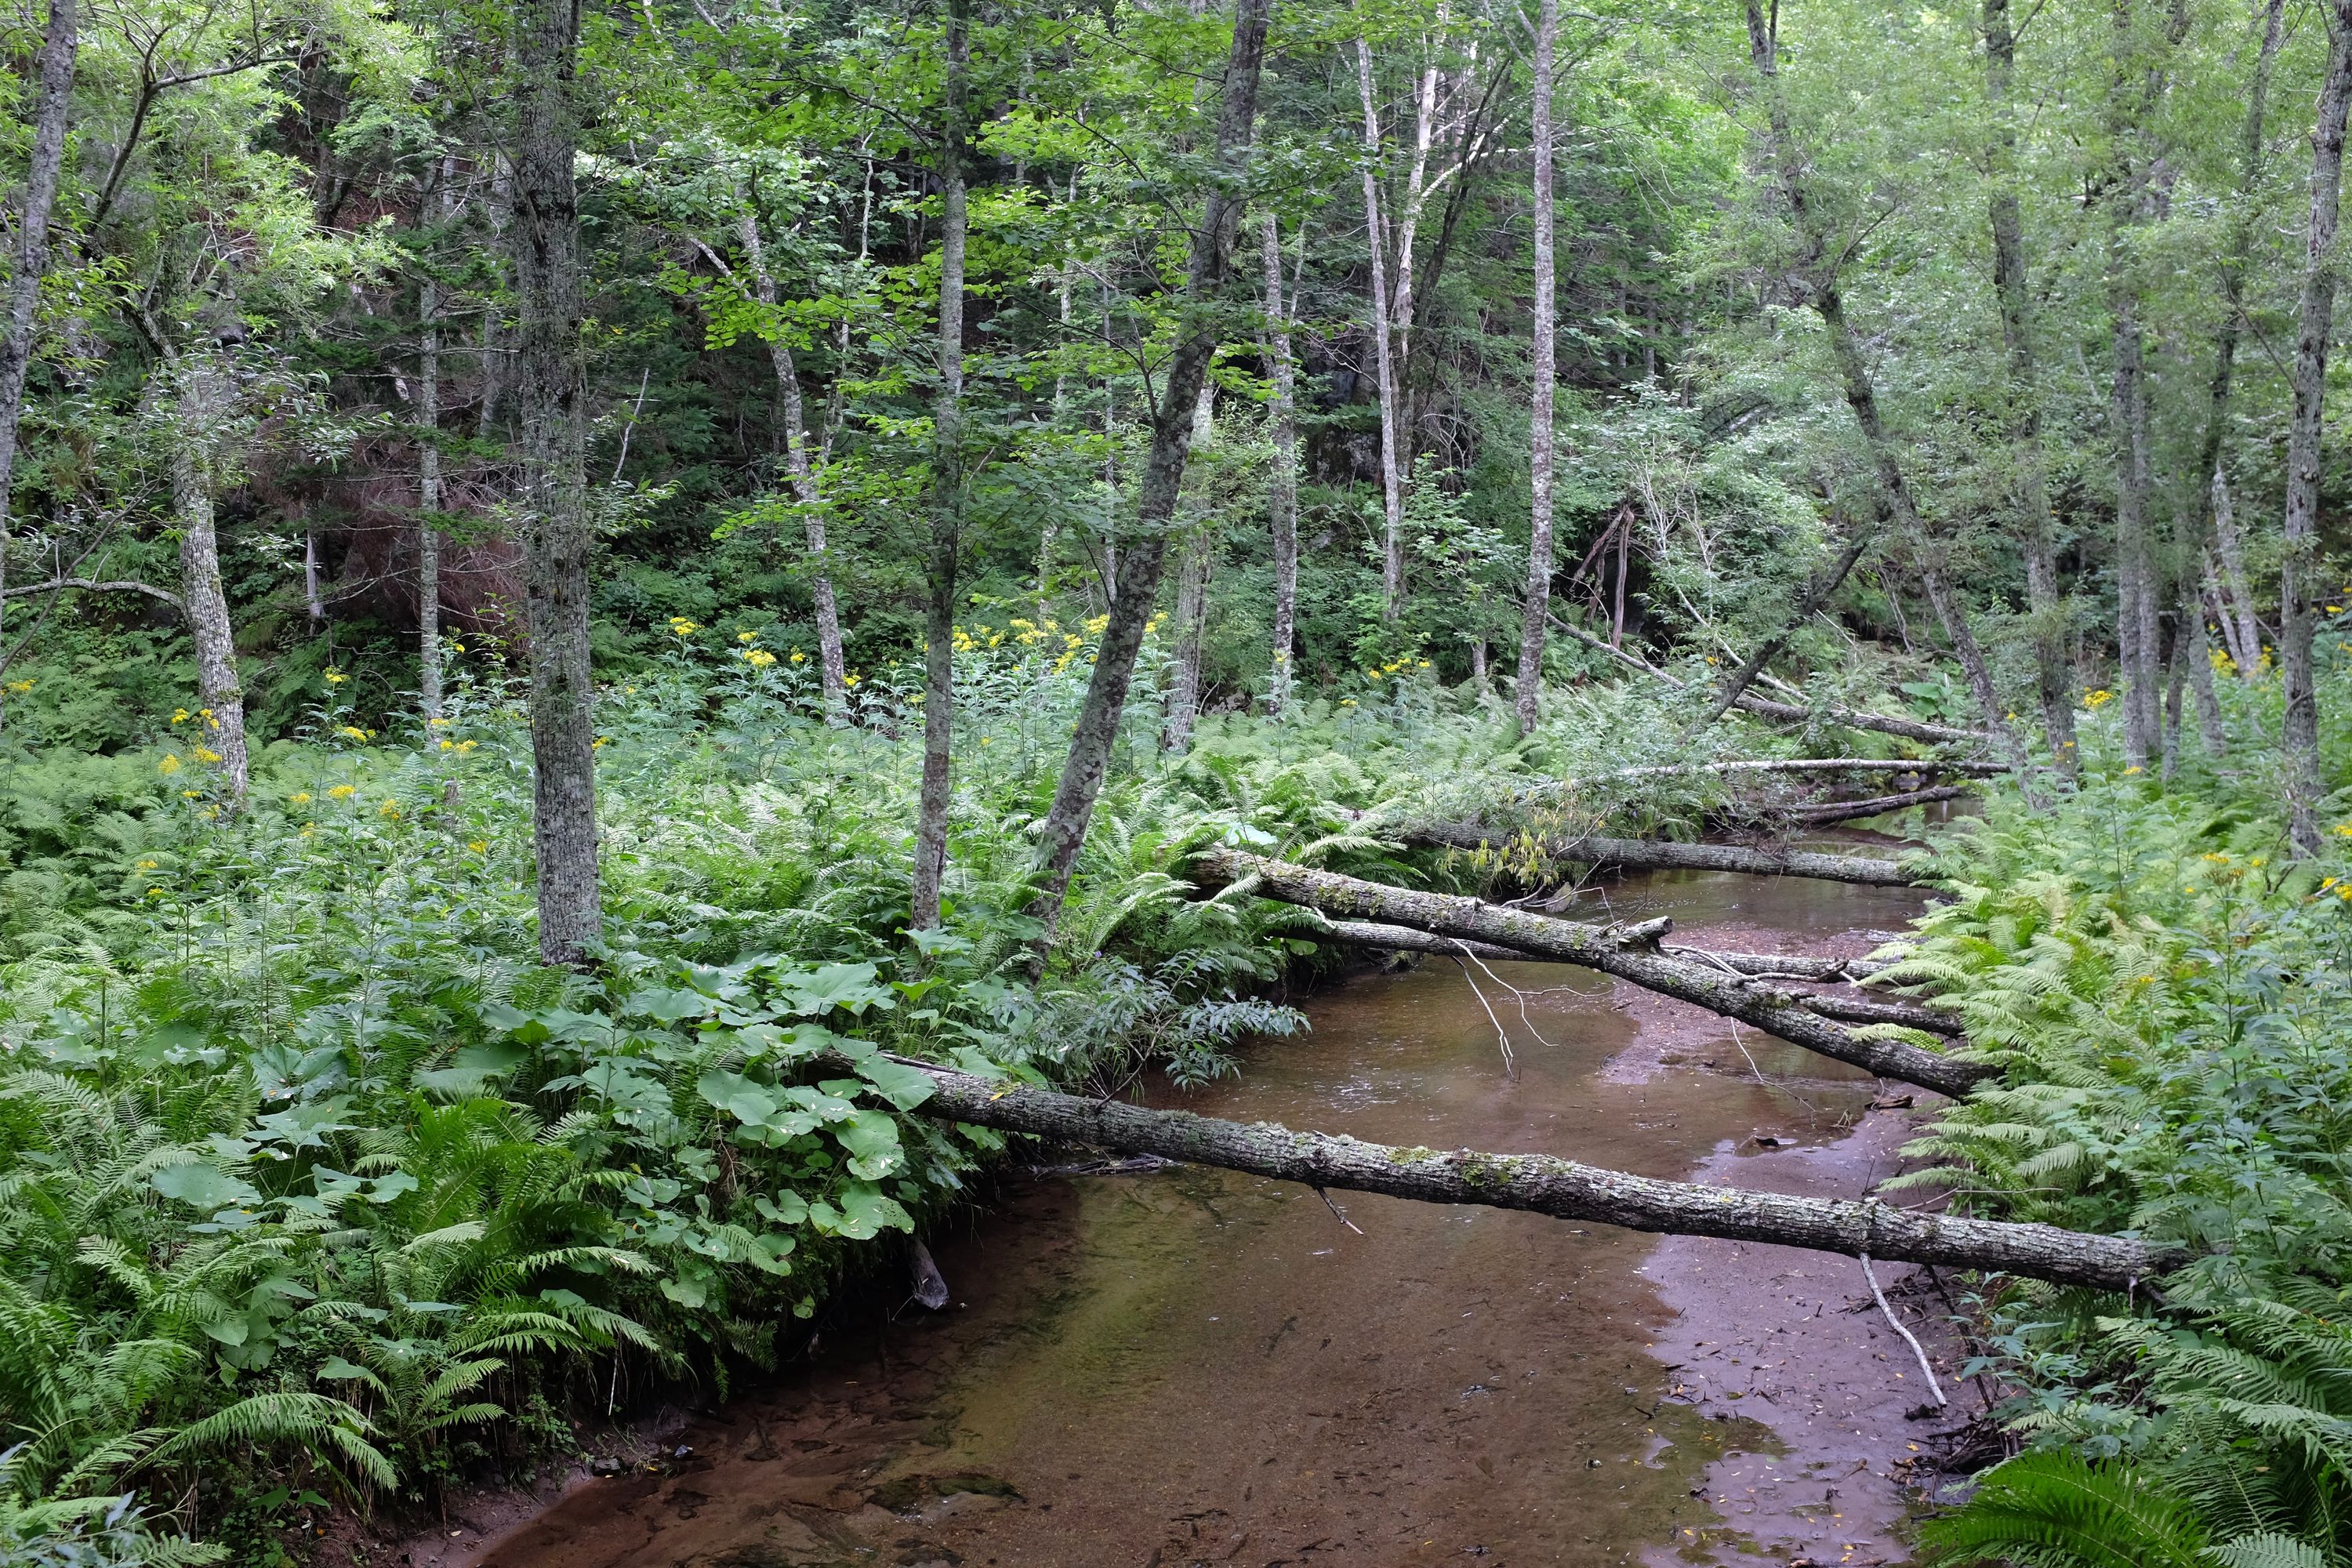 A row of trunks fallen over a third, shallow stream.